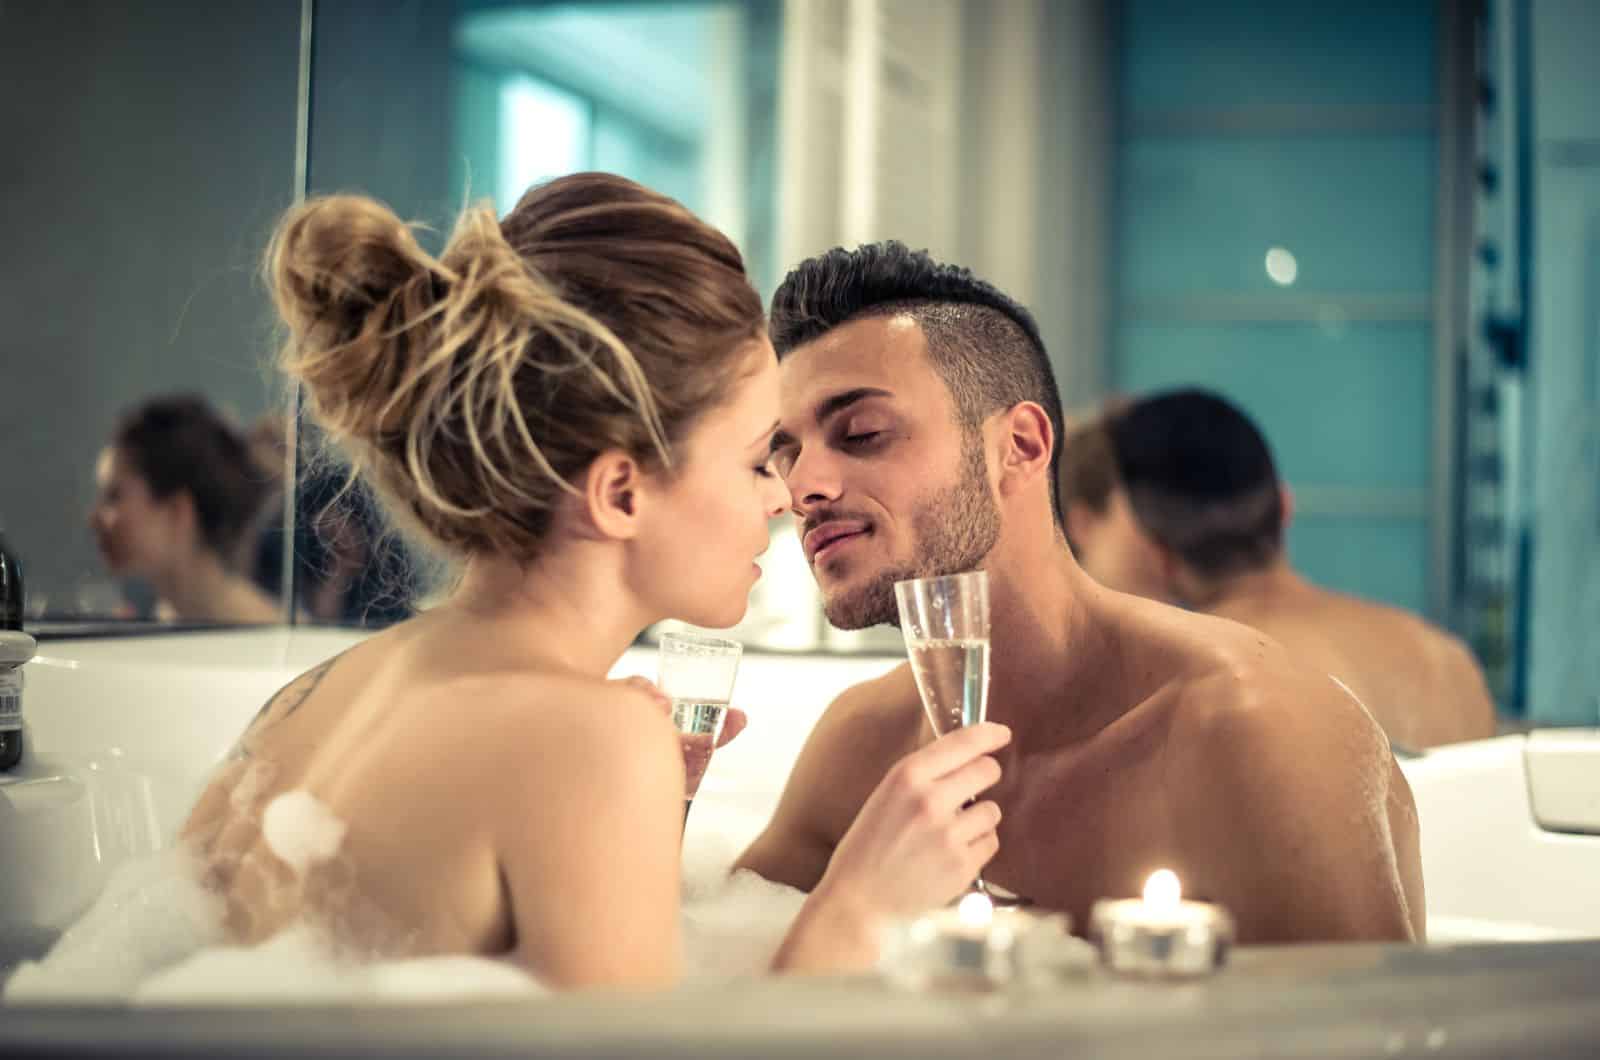 man and woman enjoying bathtub and drinking champagne